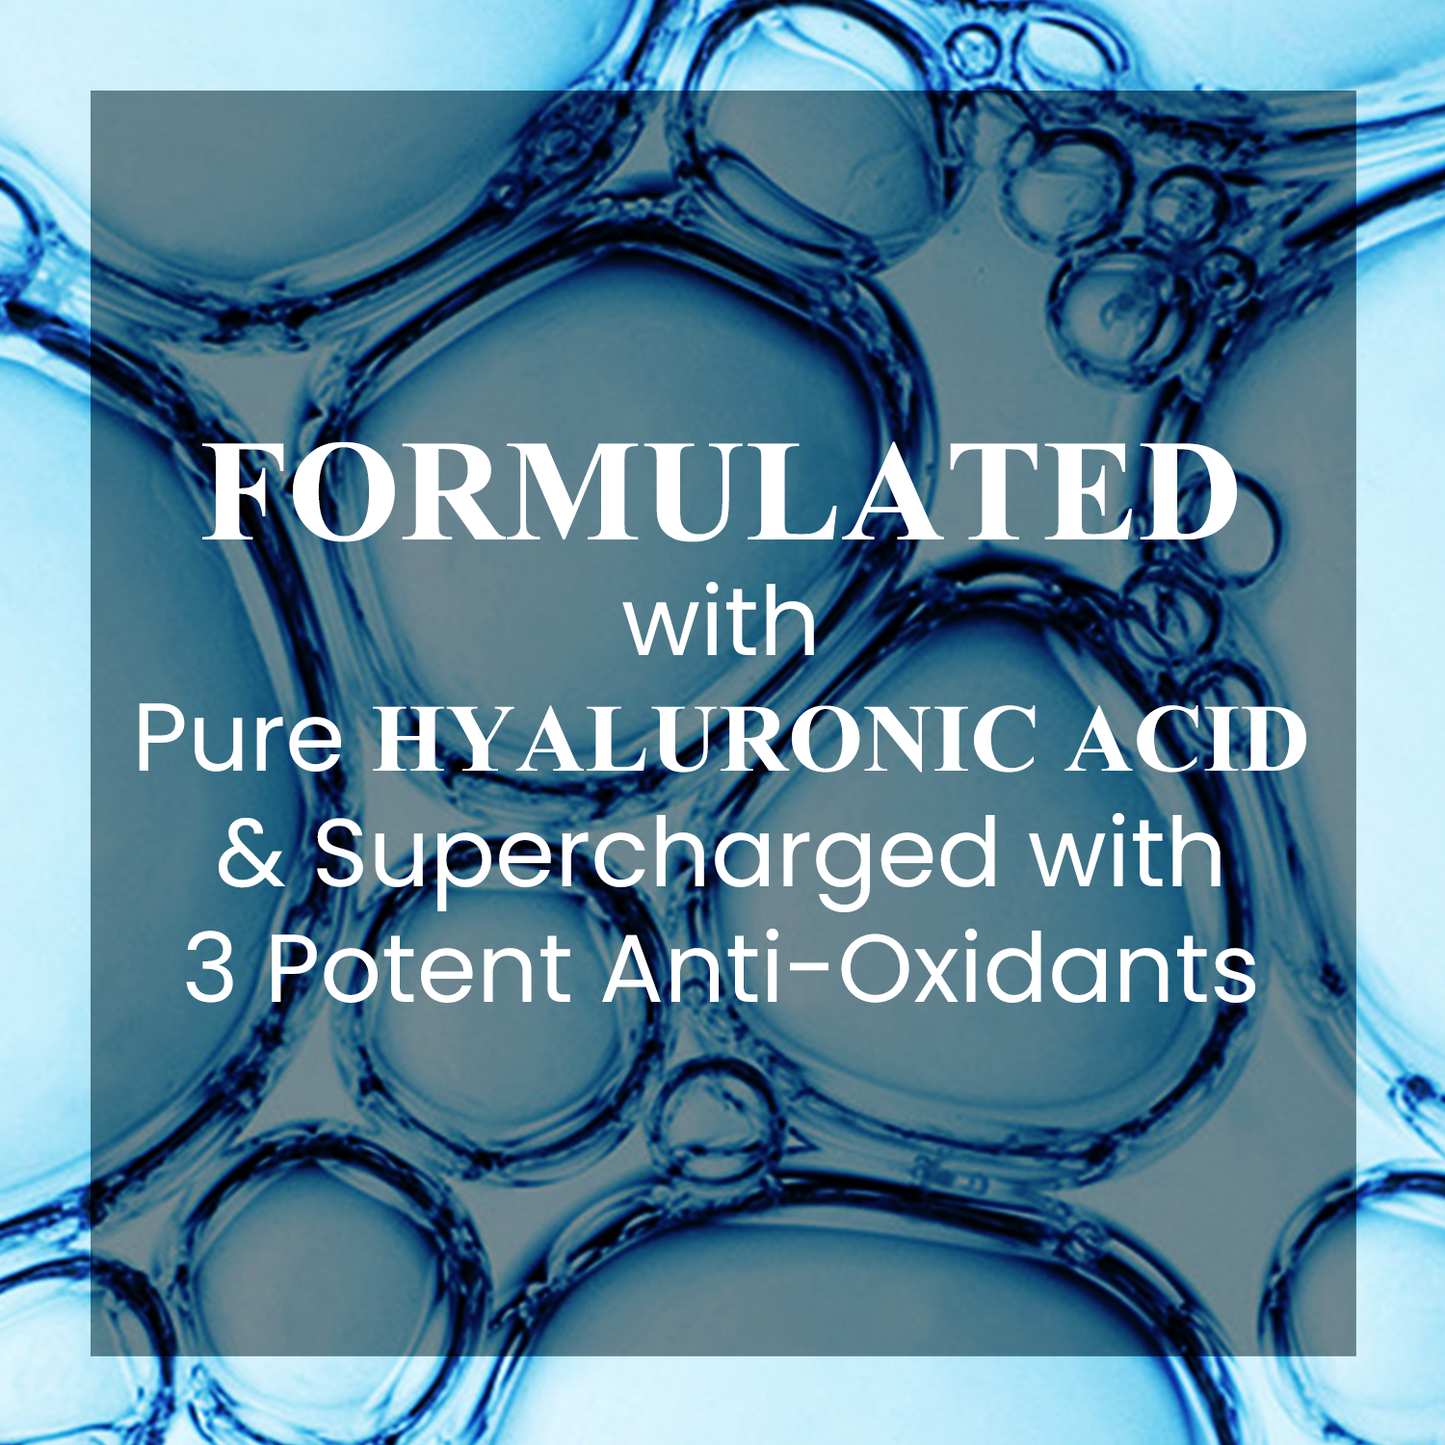 Hyaluronic Acid Serum